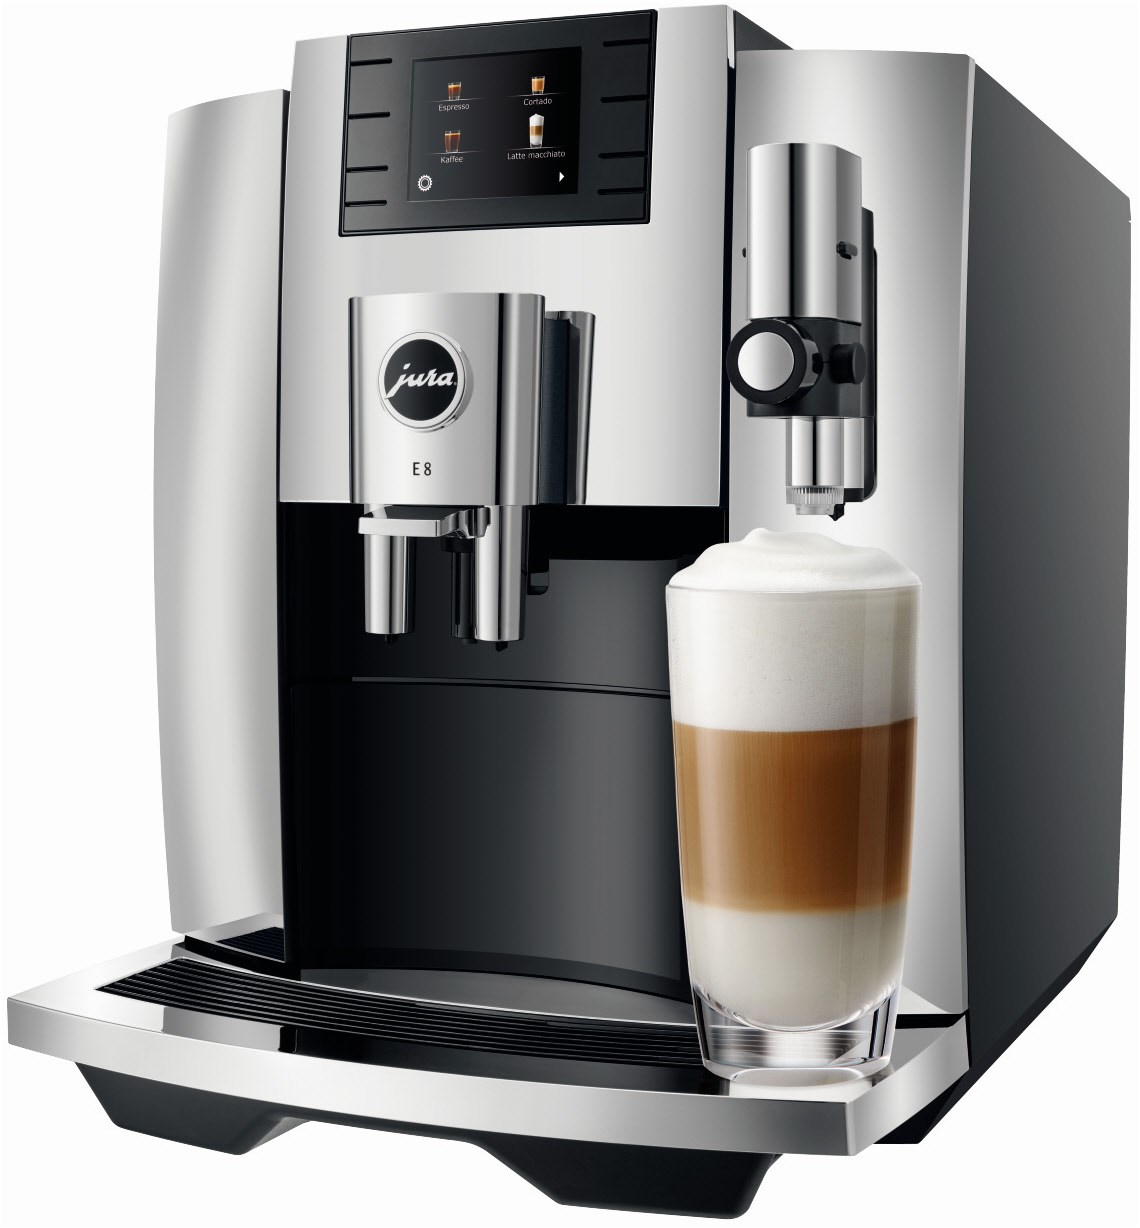 E8 Kaffee-Vollautomat Chrom (EB) von Jura